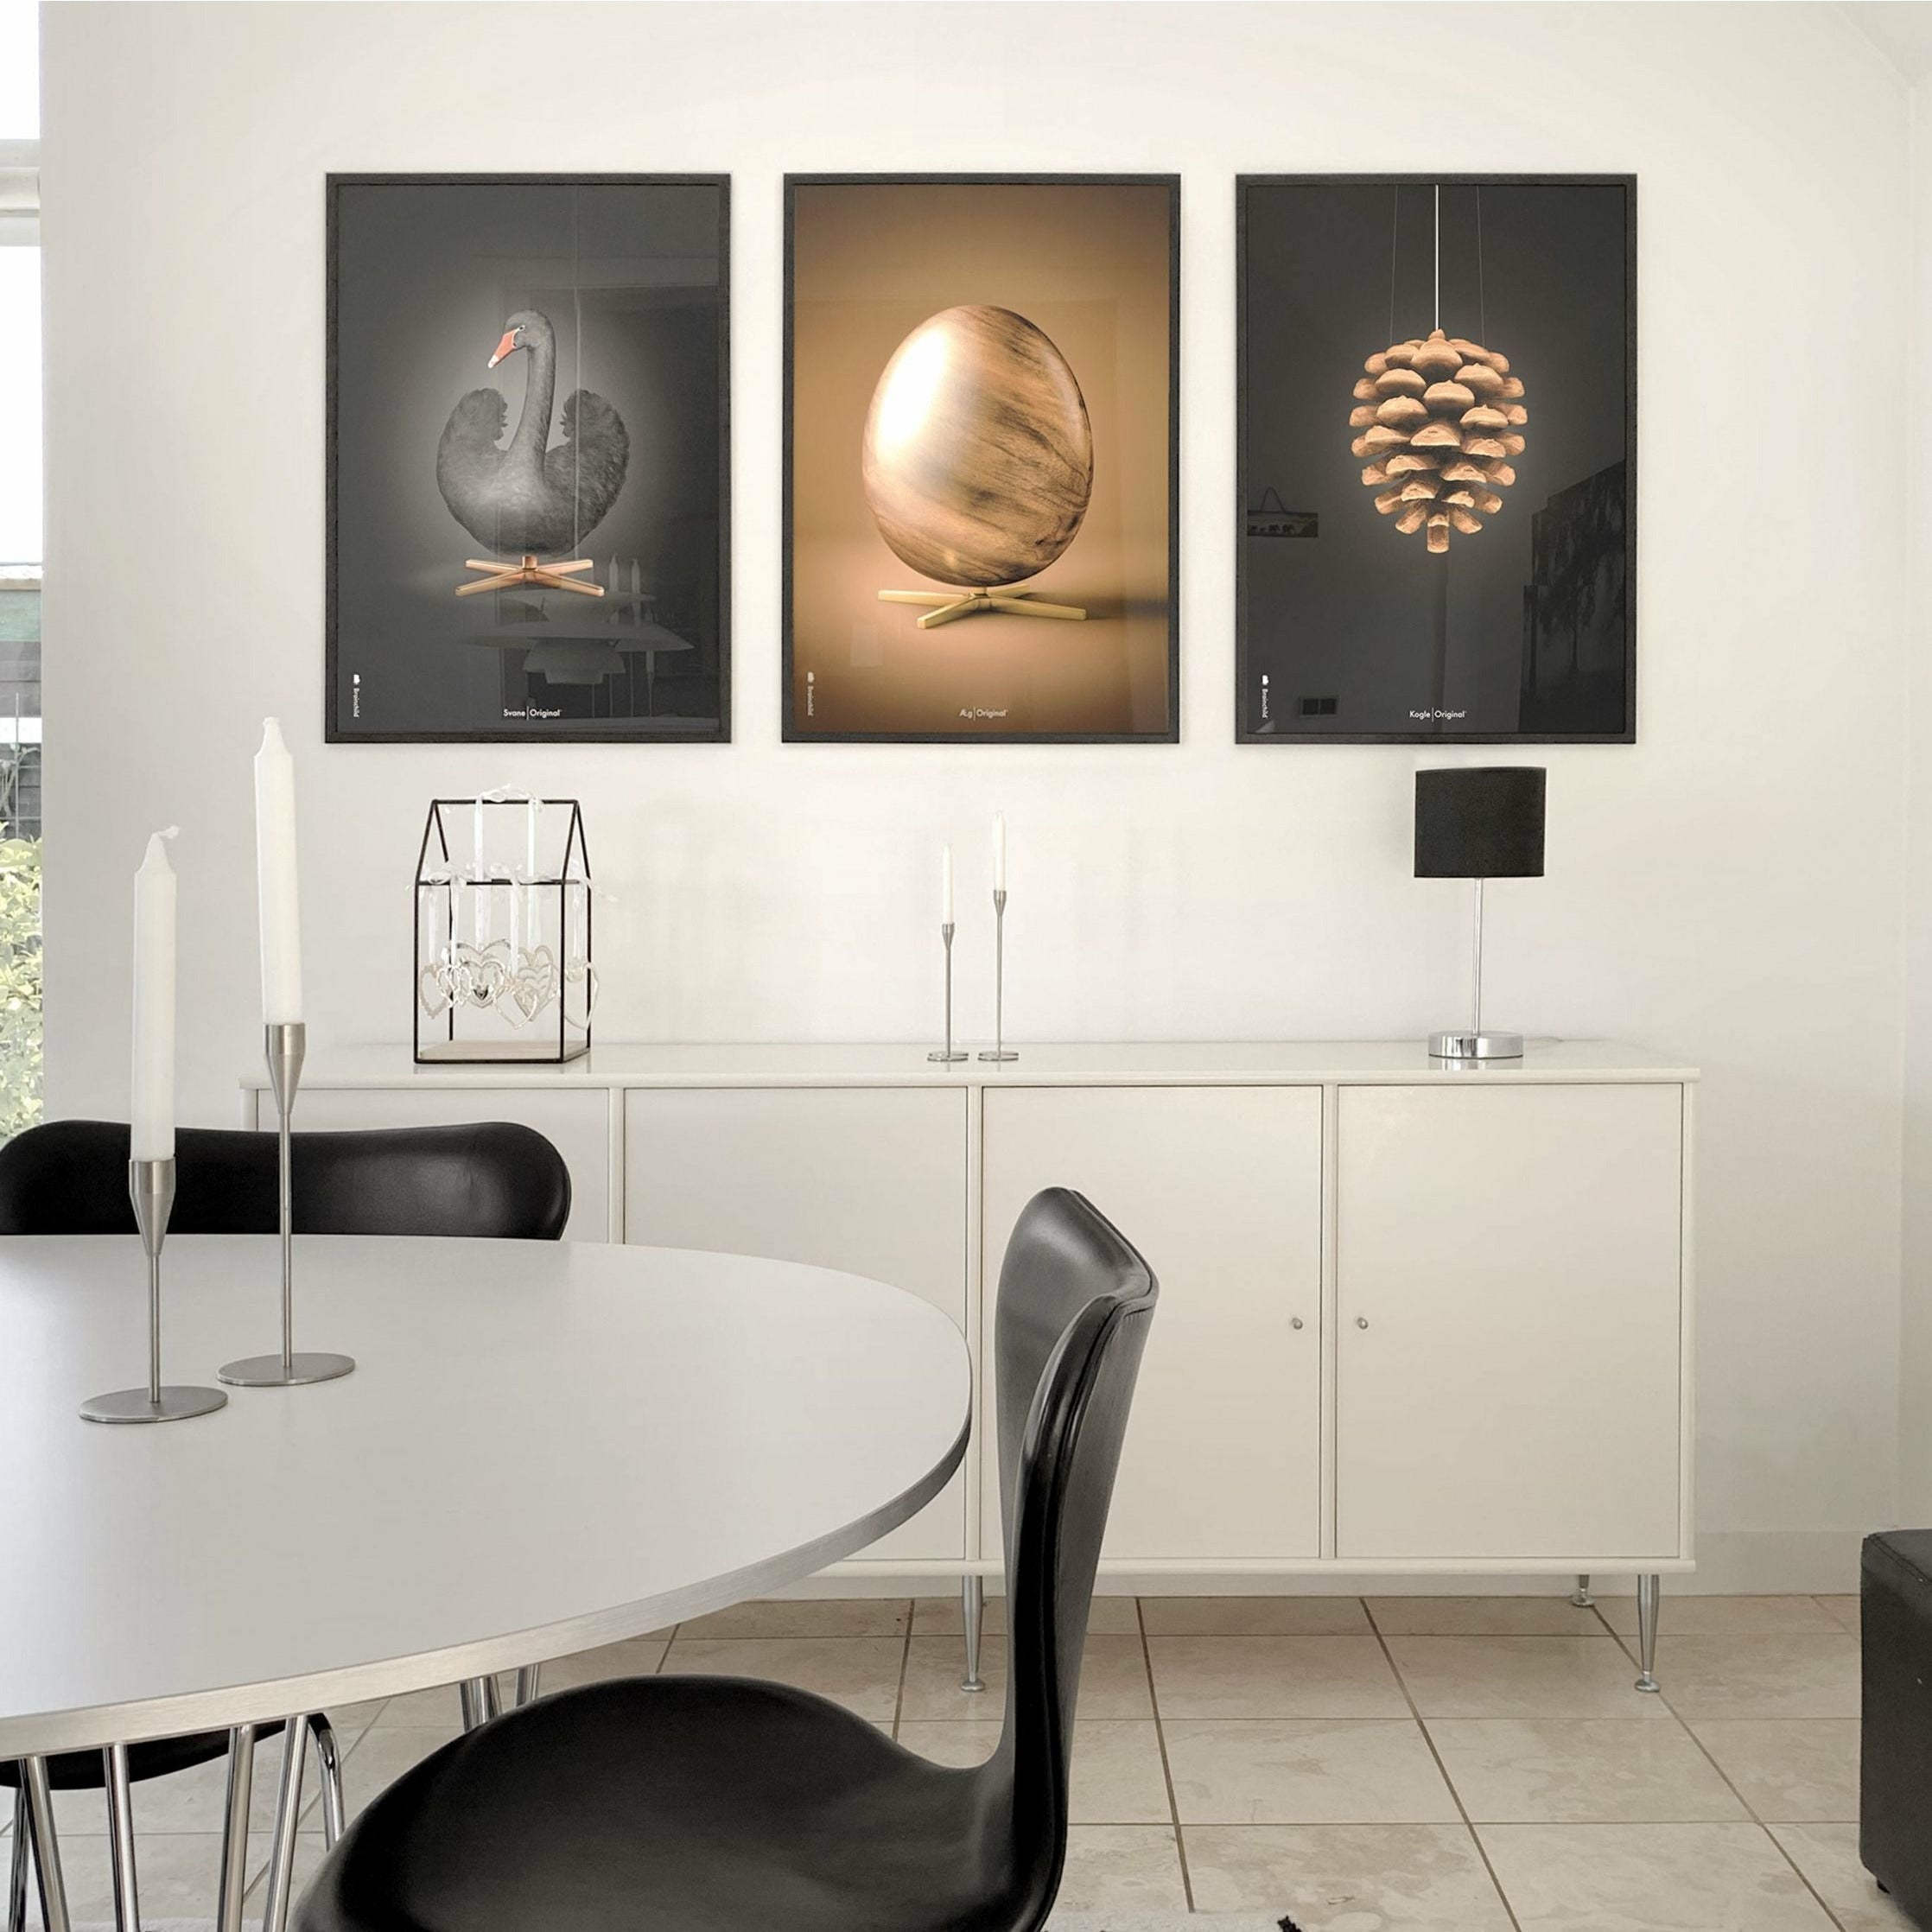 Brainchild Swan Classic Poster, Dark Wood Frame A5, svart/svart bakgrund